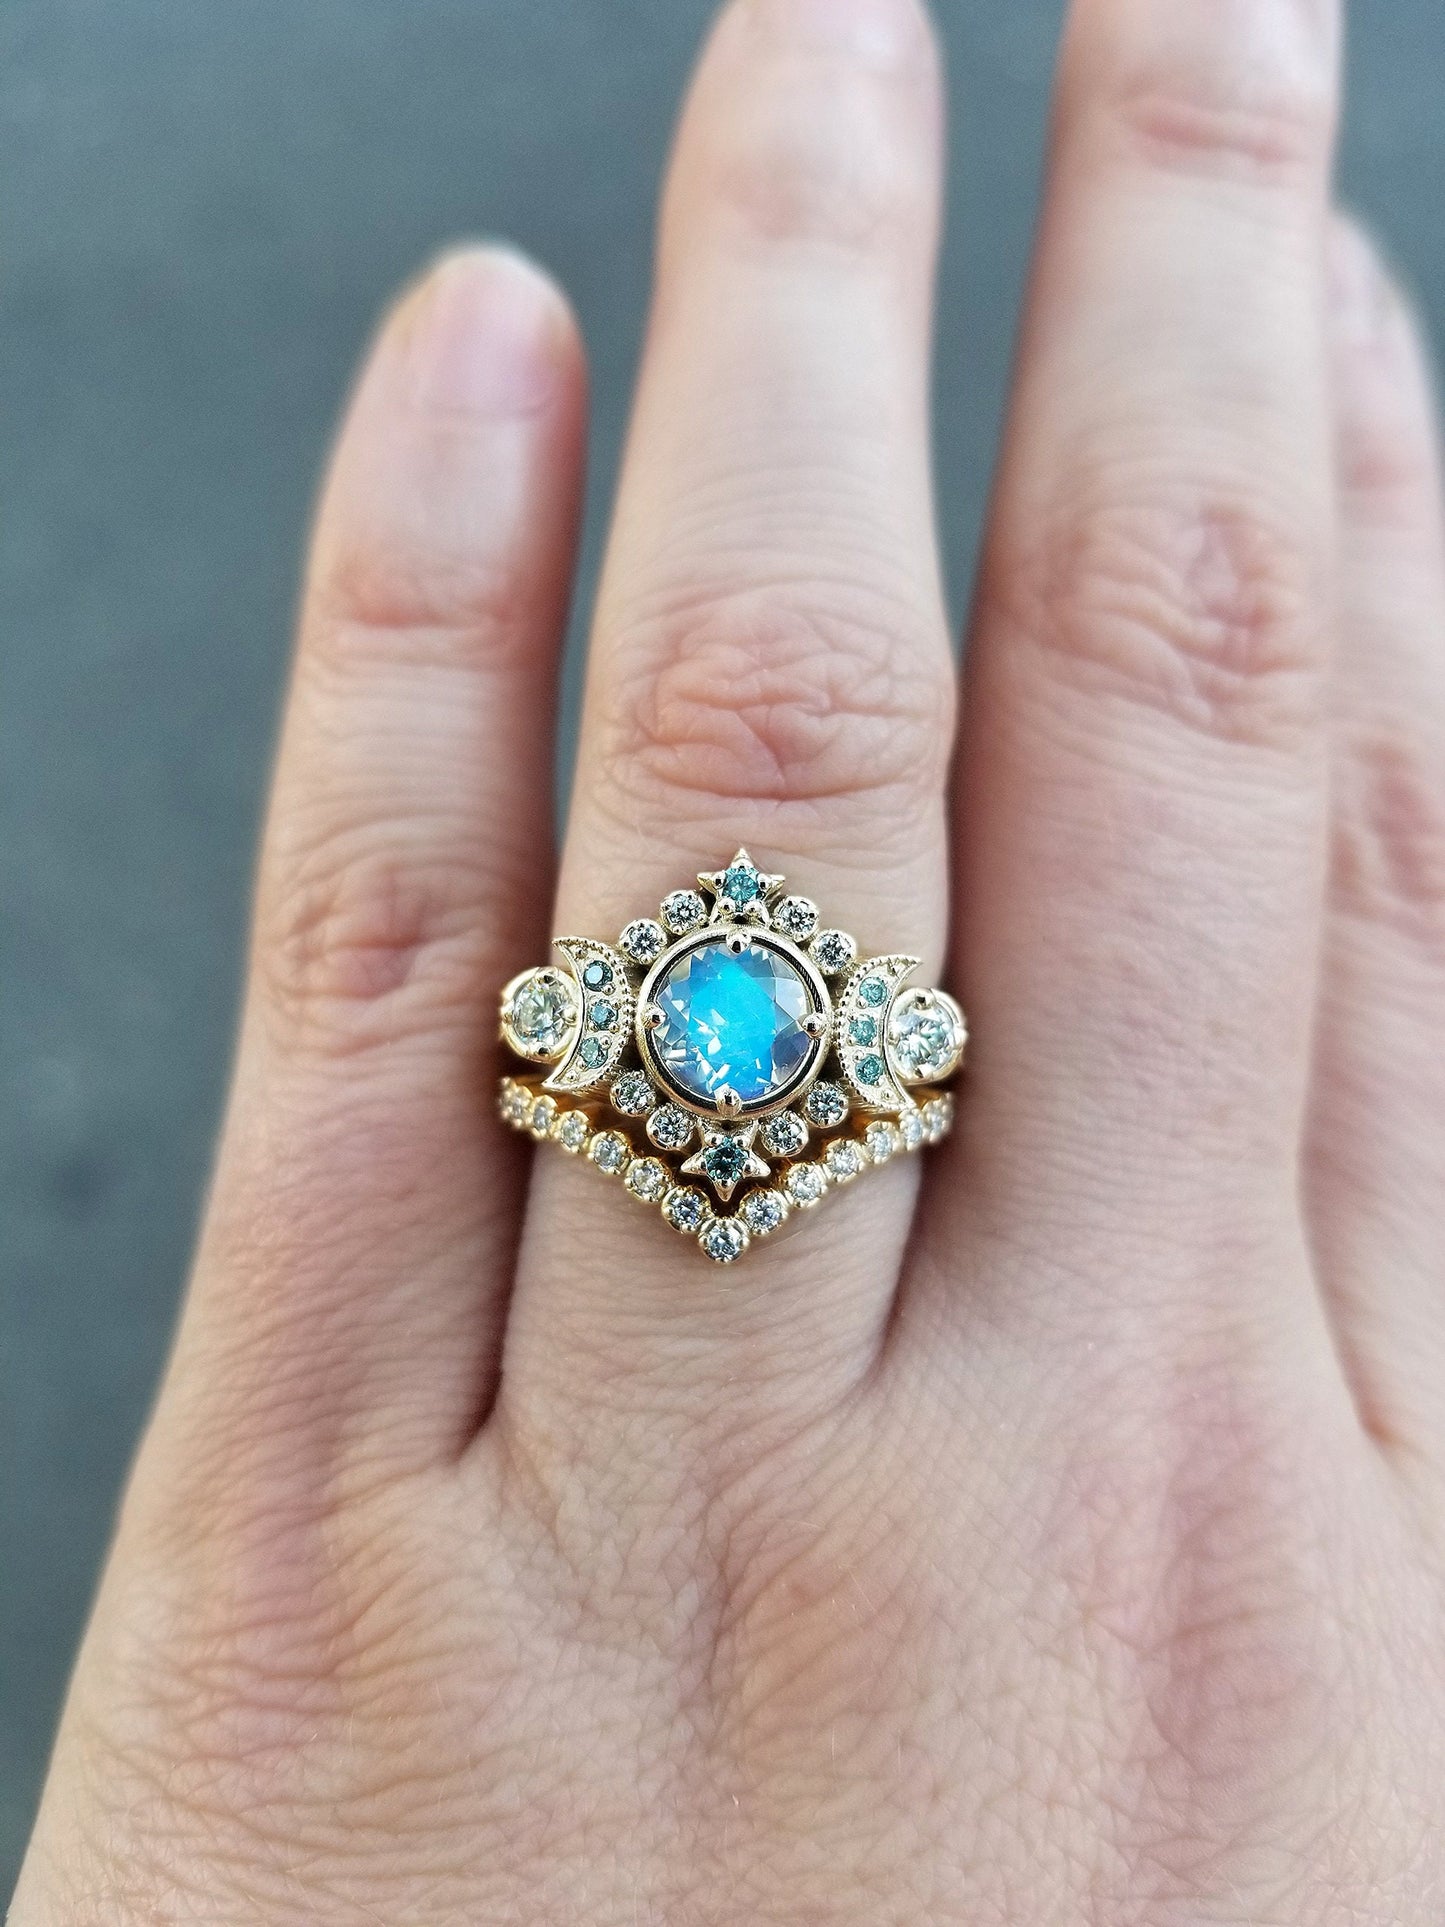 Selene Moon Goddess Ring Set - Moonstone with Blue and White Diamonds - 14k Yellow Gold Pave Diamond Chevron